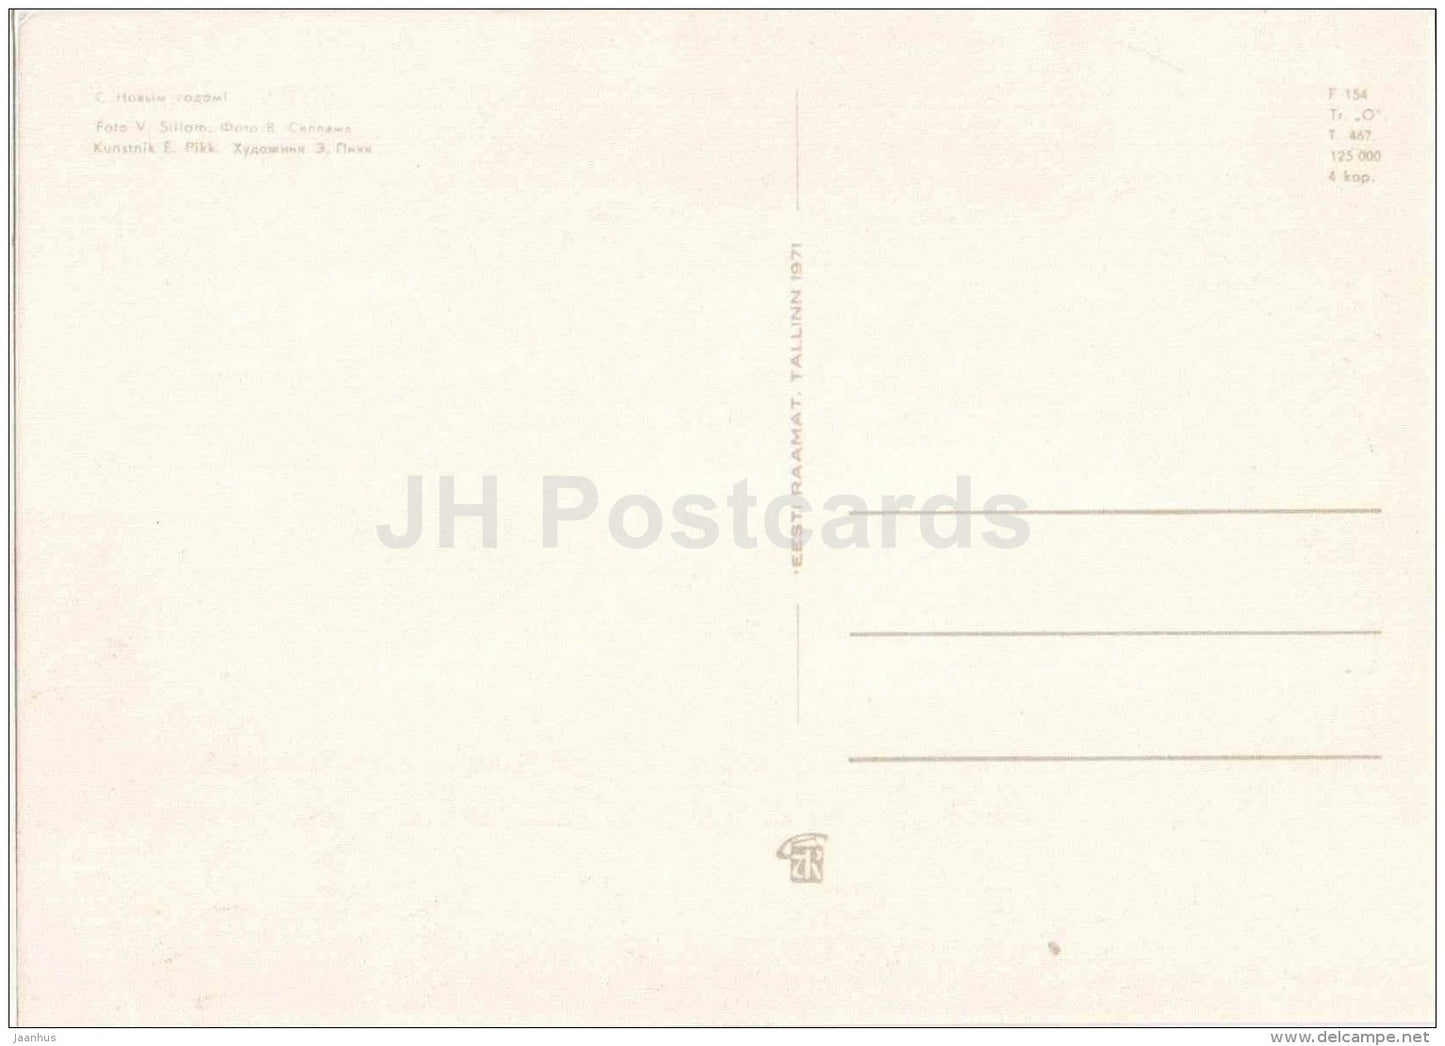 New Year greeting Card - flowers - 1971 - Estonia USSR - unused - JH Postcards